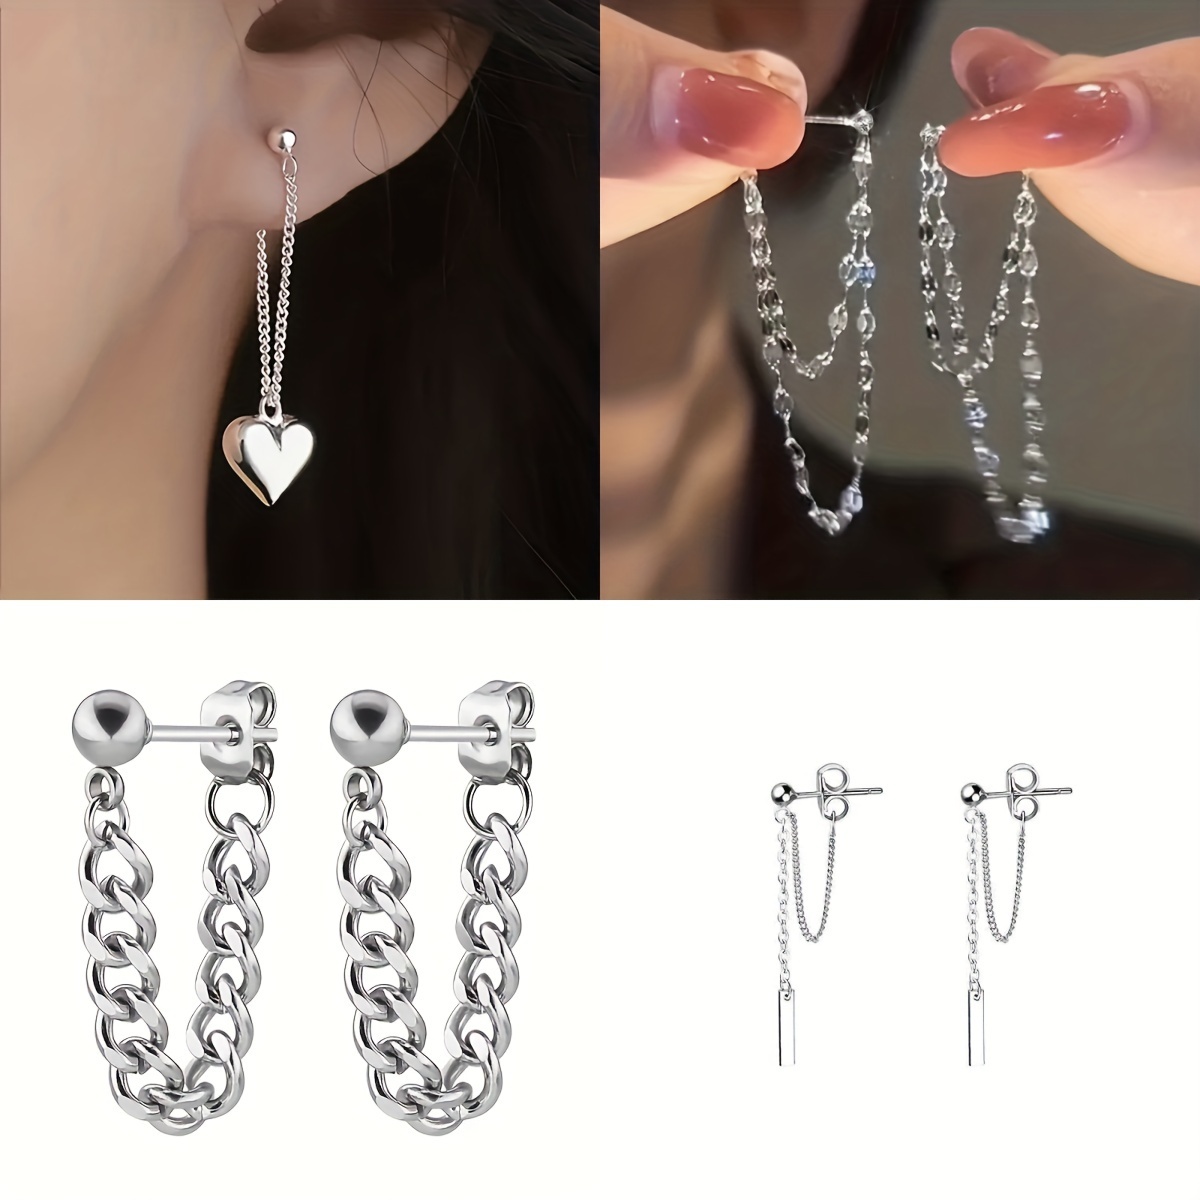 

4 Pair Silvery Heart Chain Design Earrings, Hypoallergenic Party Accessories Gift, Heart Stud Earrings Set